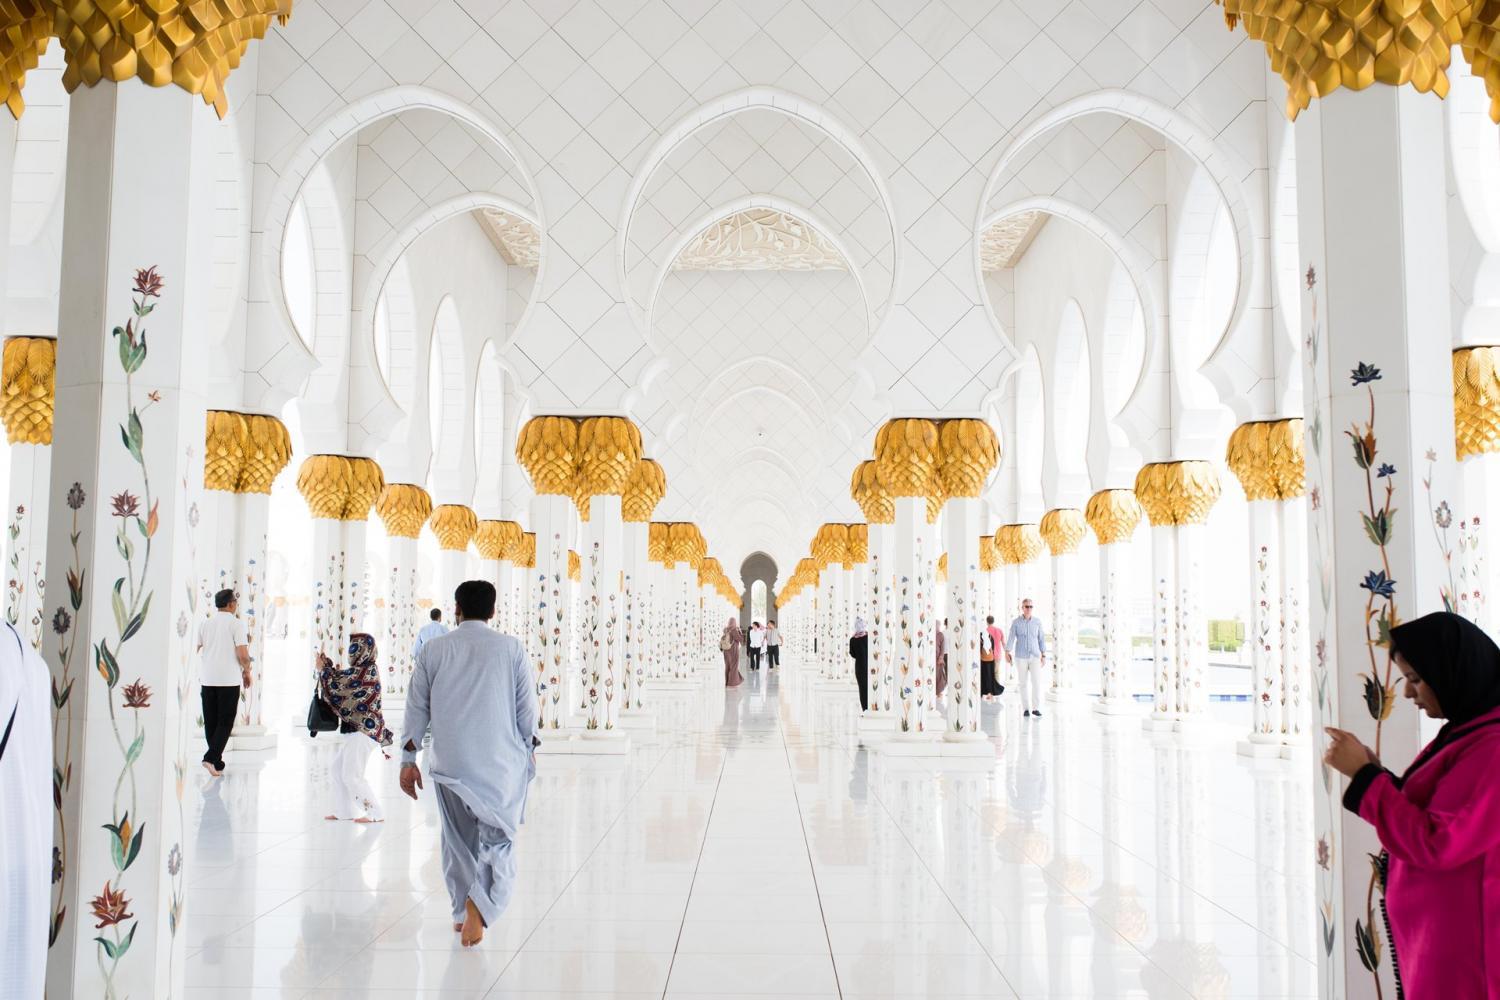 Abu-Dabi-Mosque-&-Warner-Bros-Tour-from-Dubai-8